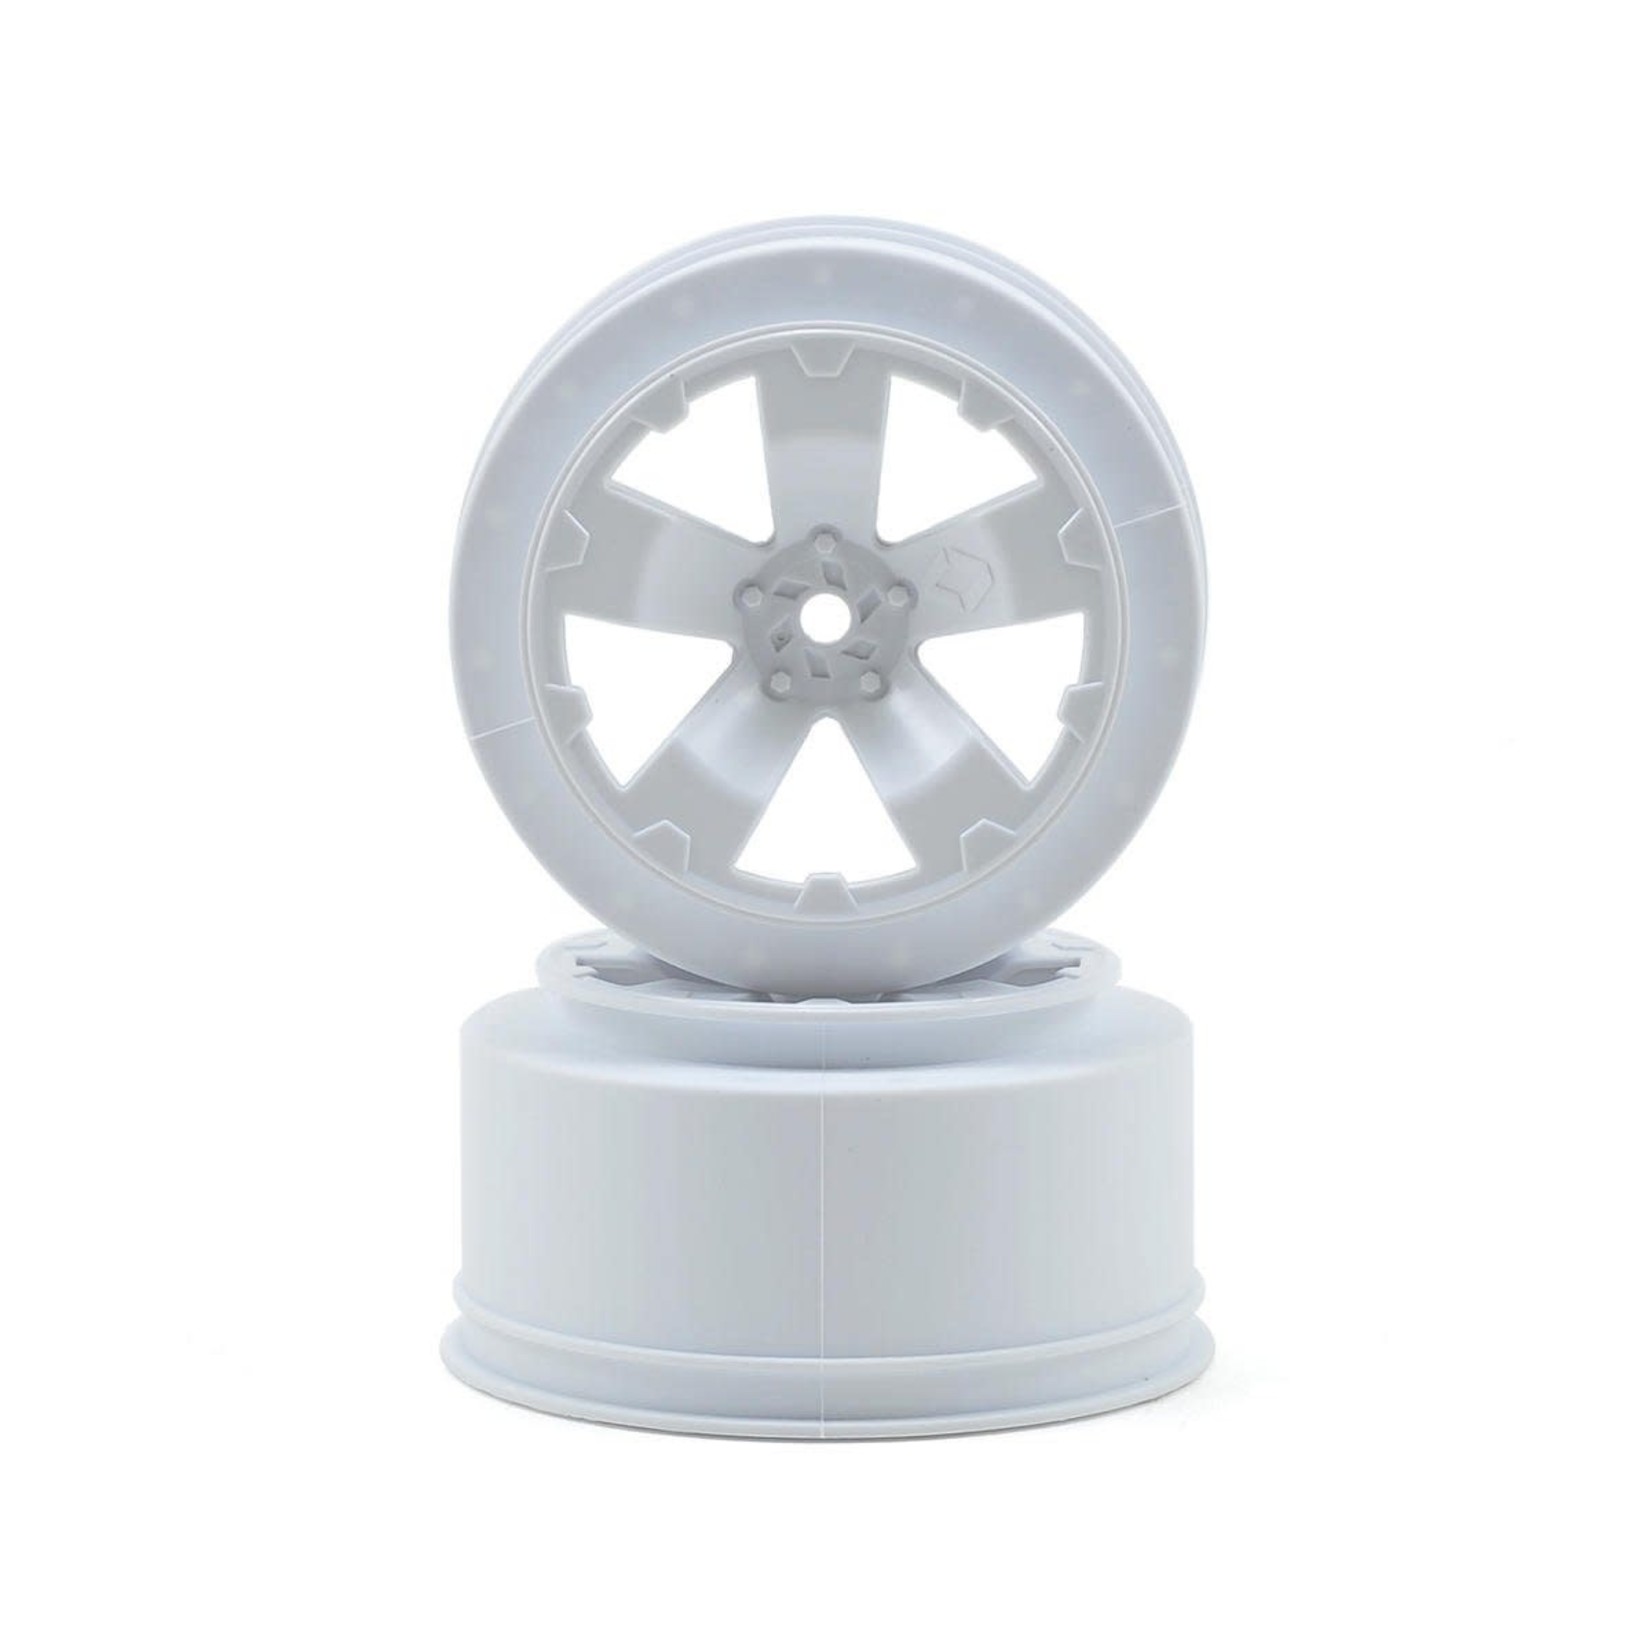 Avid RC Avid RC Sabertooth Short Course Wheels w/3mm Offset (White) (2) (SC5M) w/12mm Hex #AV1100W